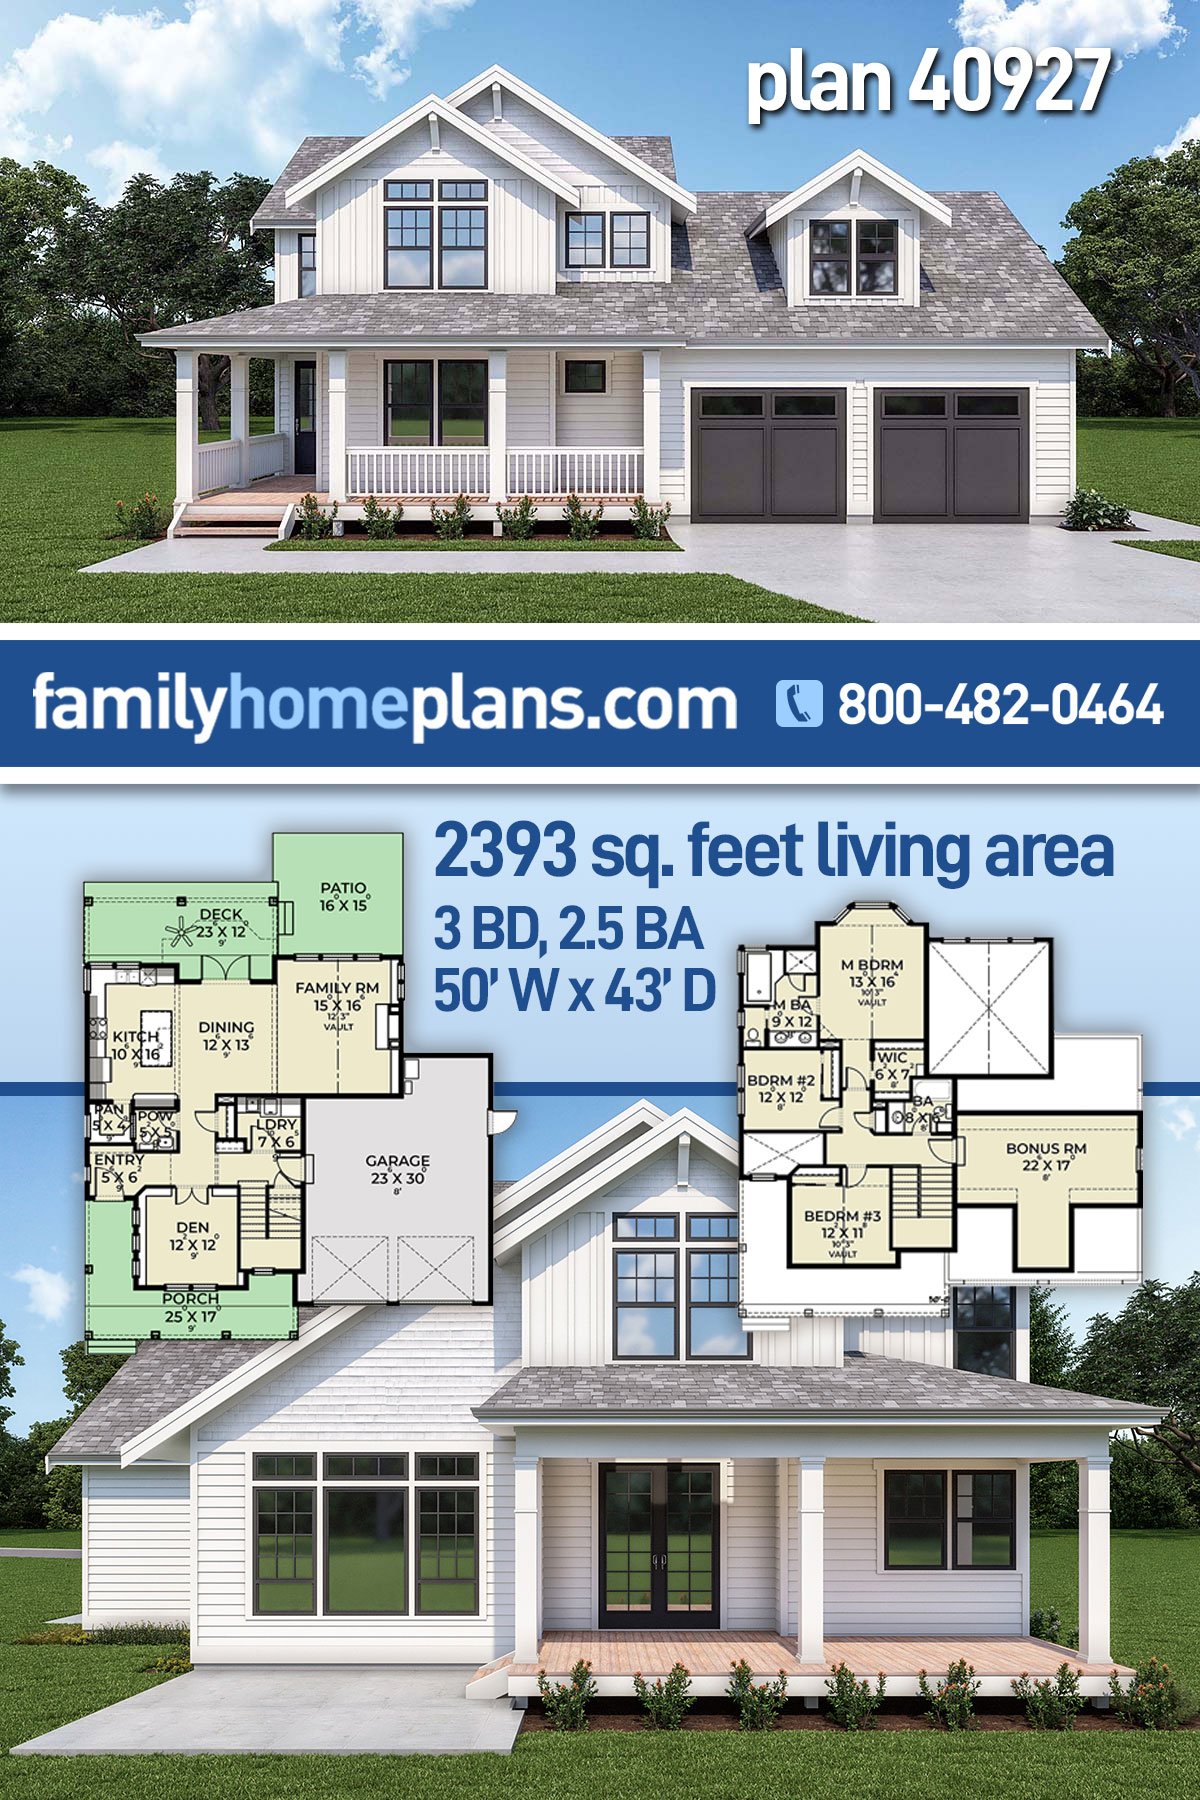 House Plan 40927